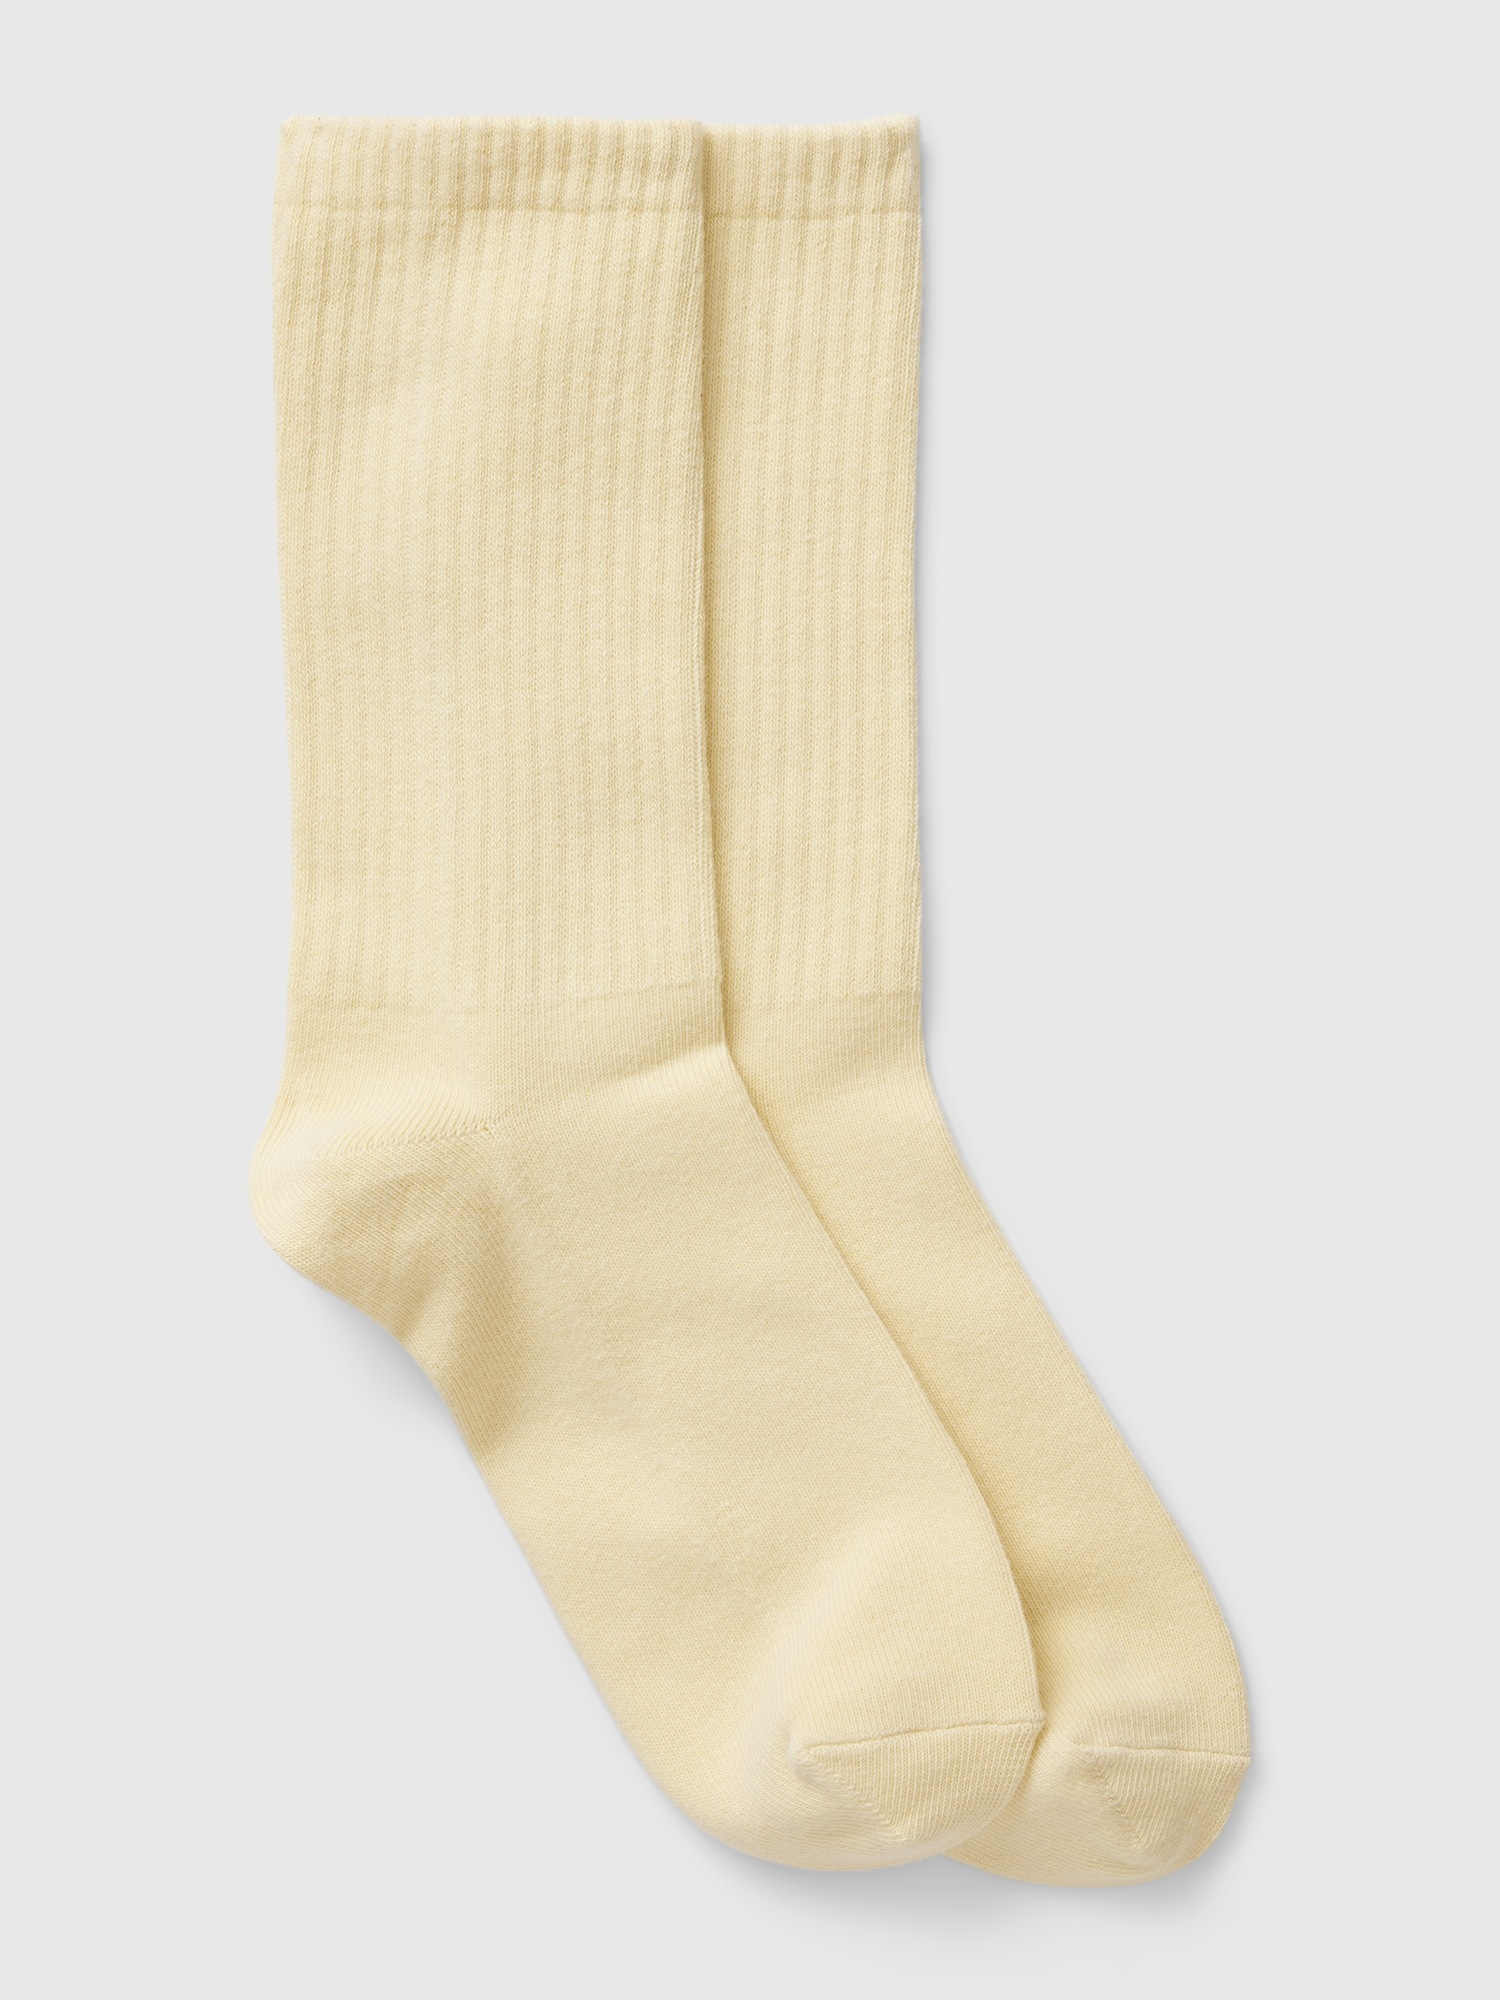 Gap Cotton Crew Socks In Maize Yellow